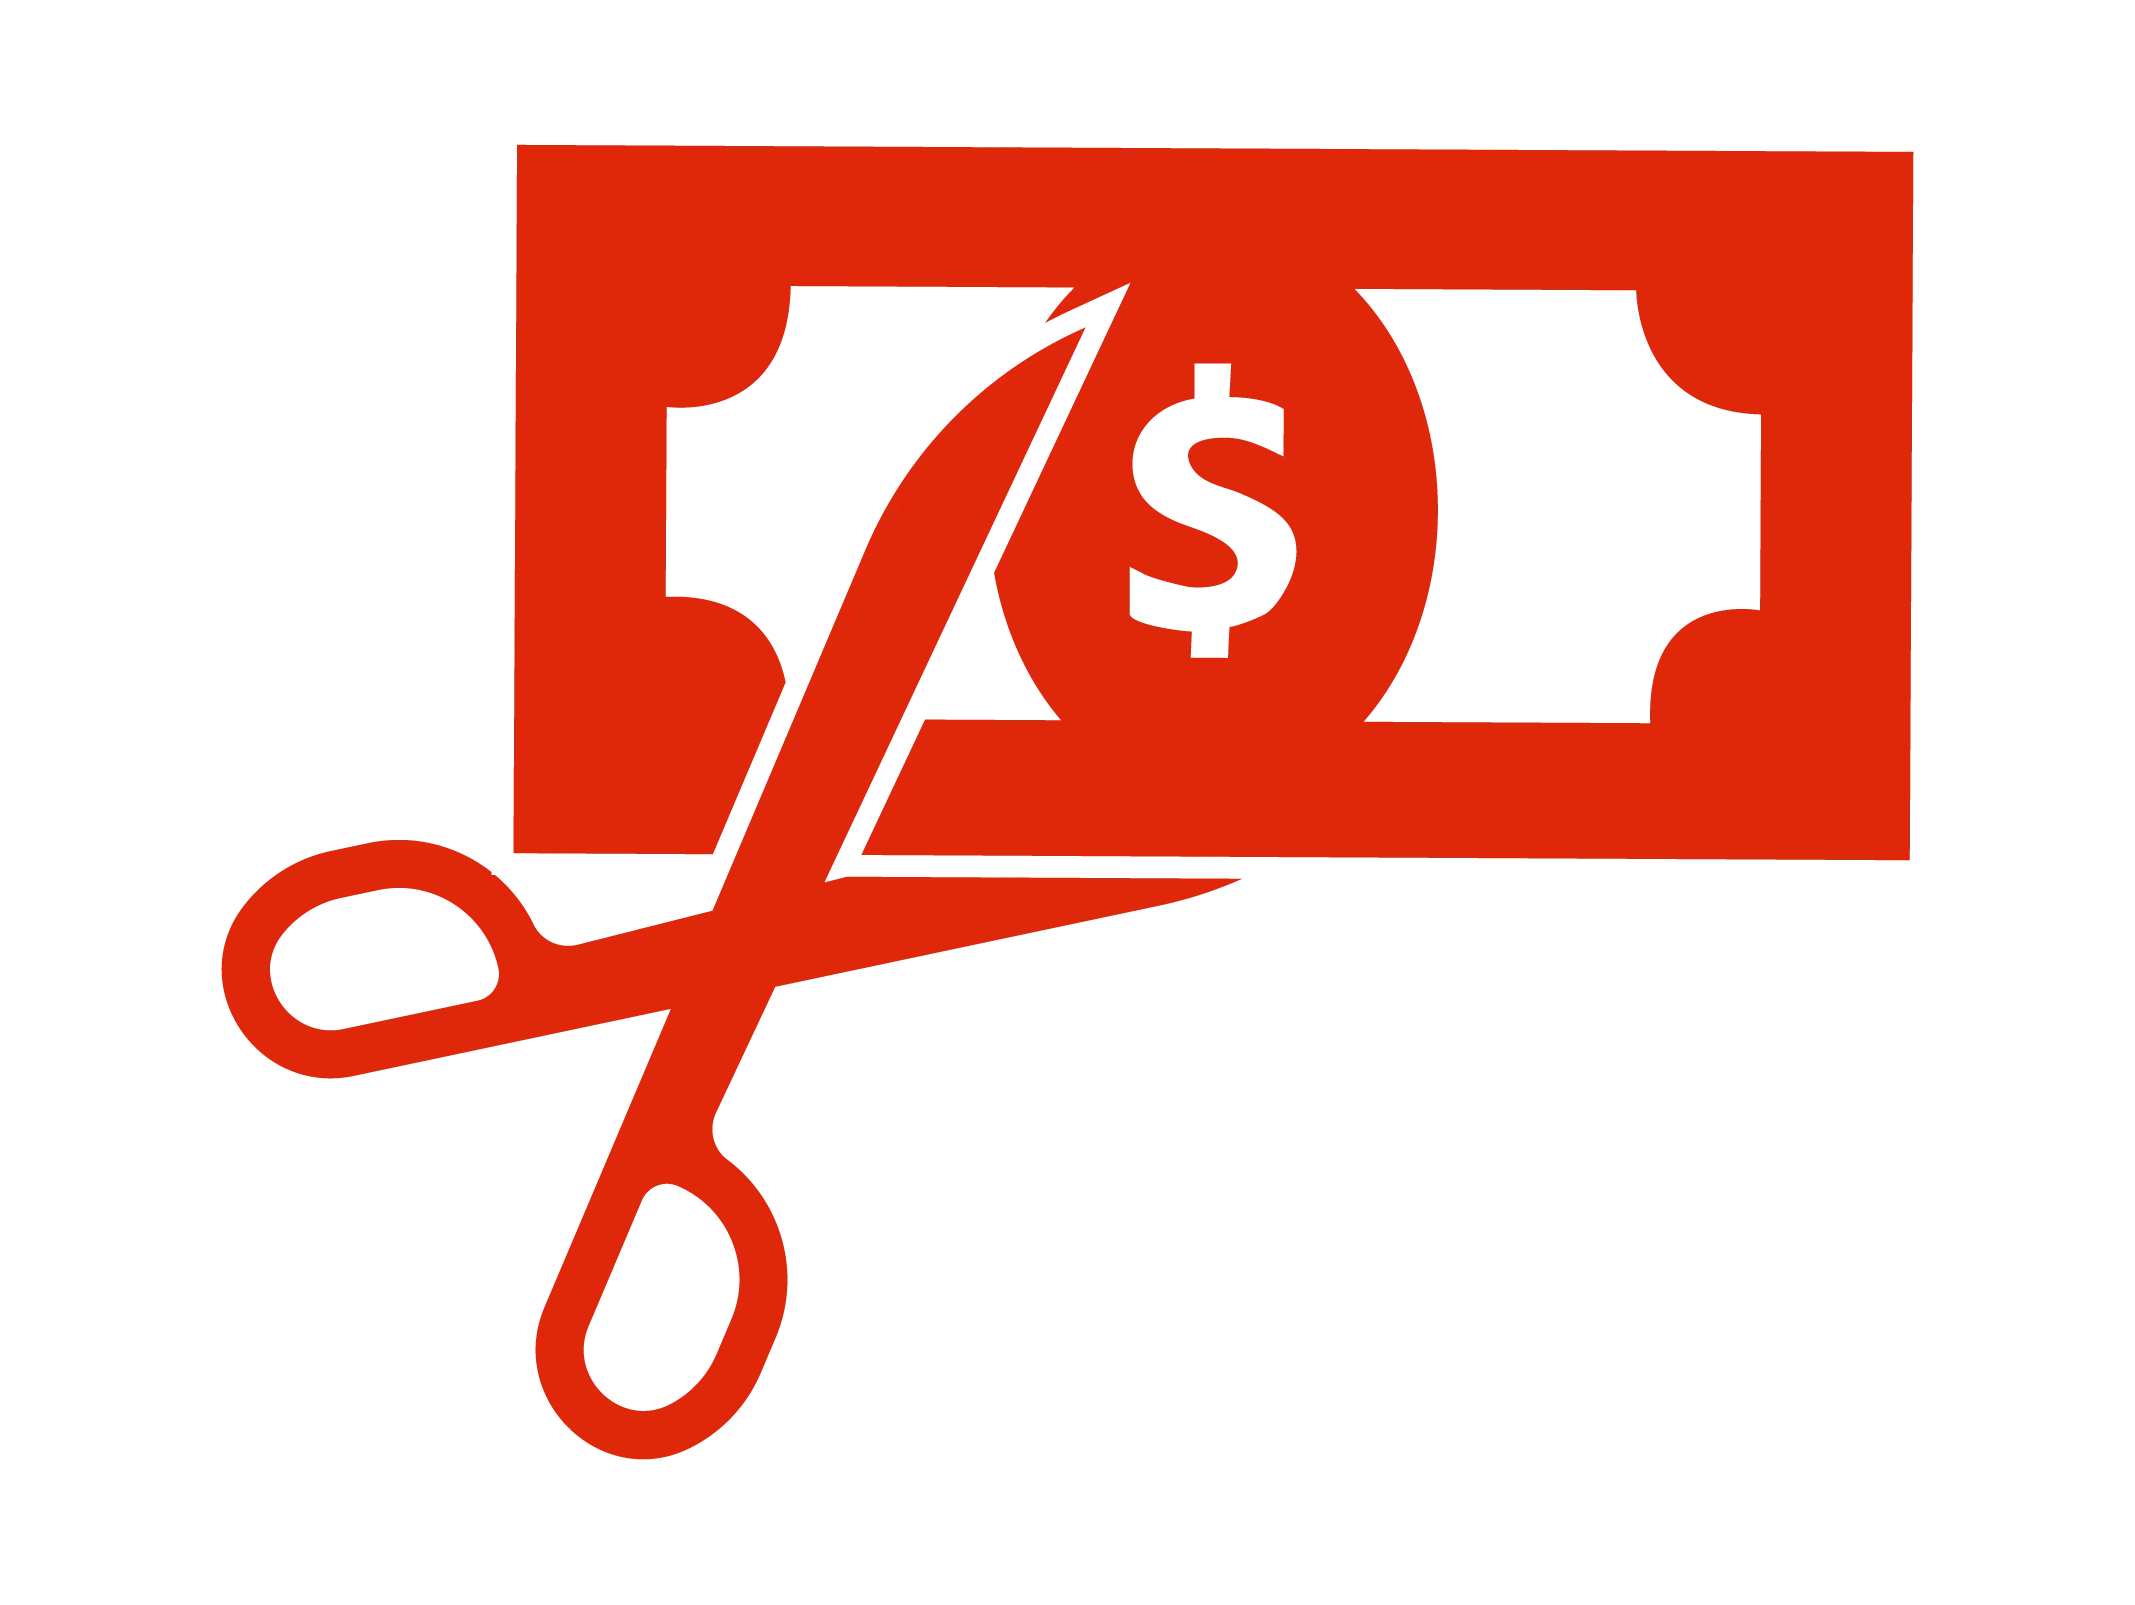 Icon of scissors cutting money